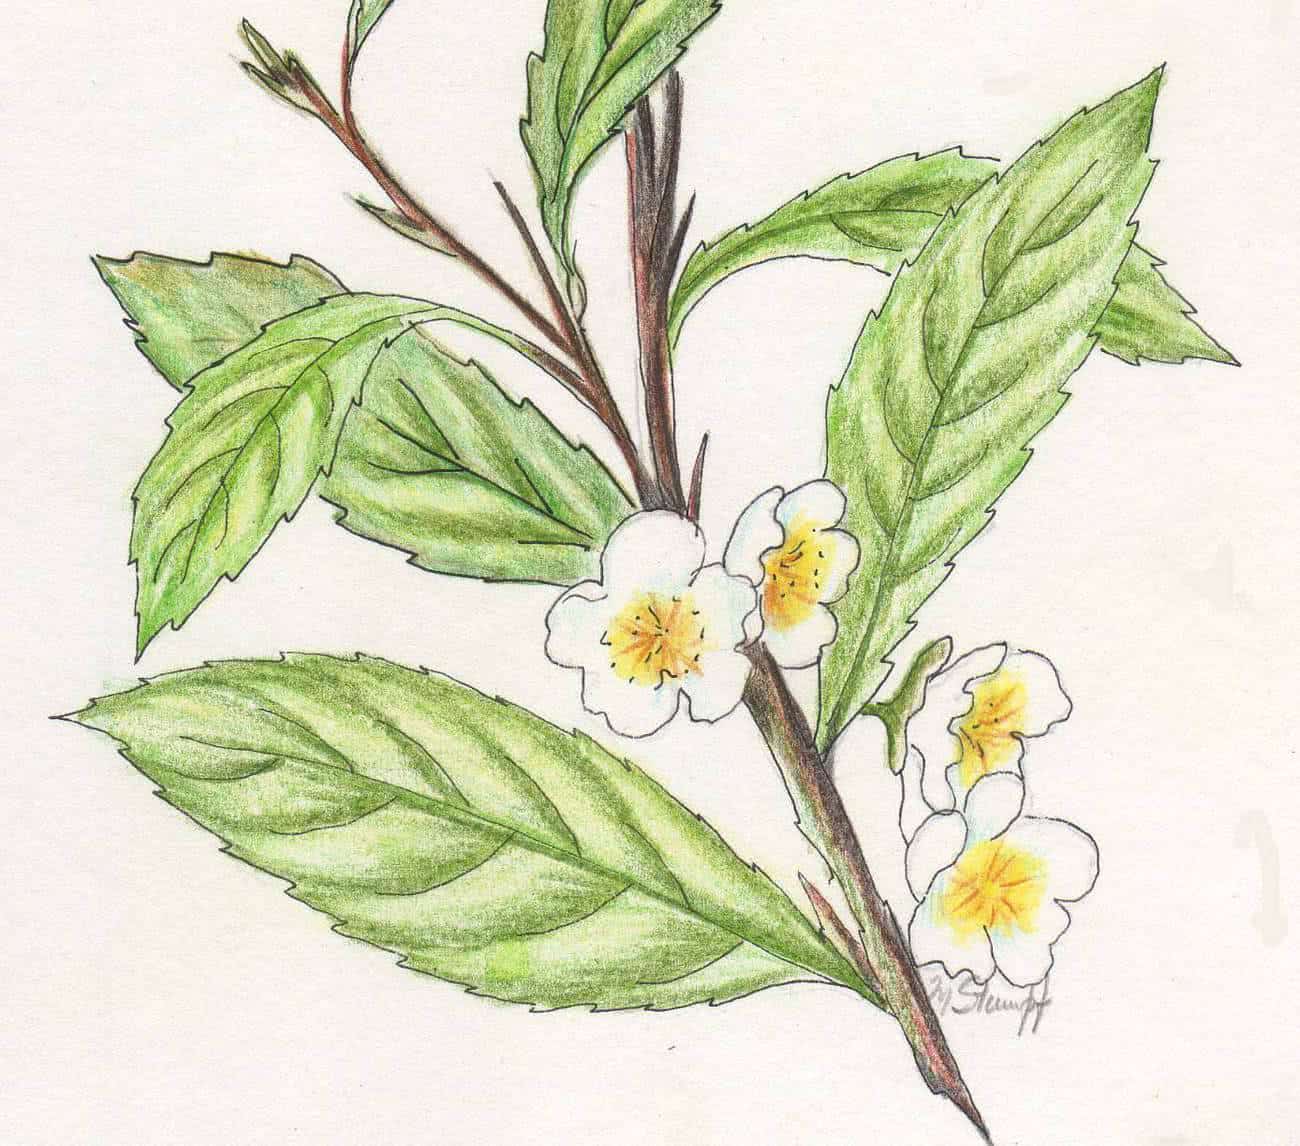 Chá da india - camilla sinensis